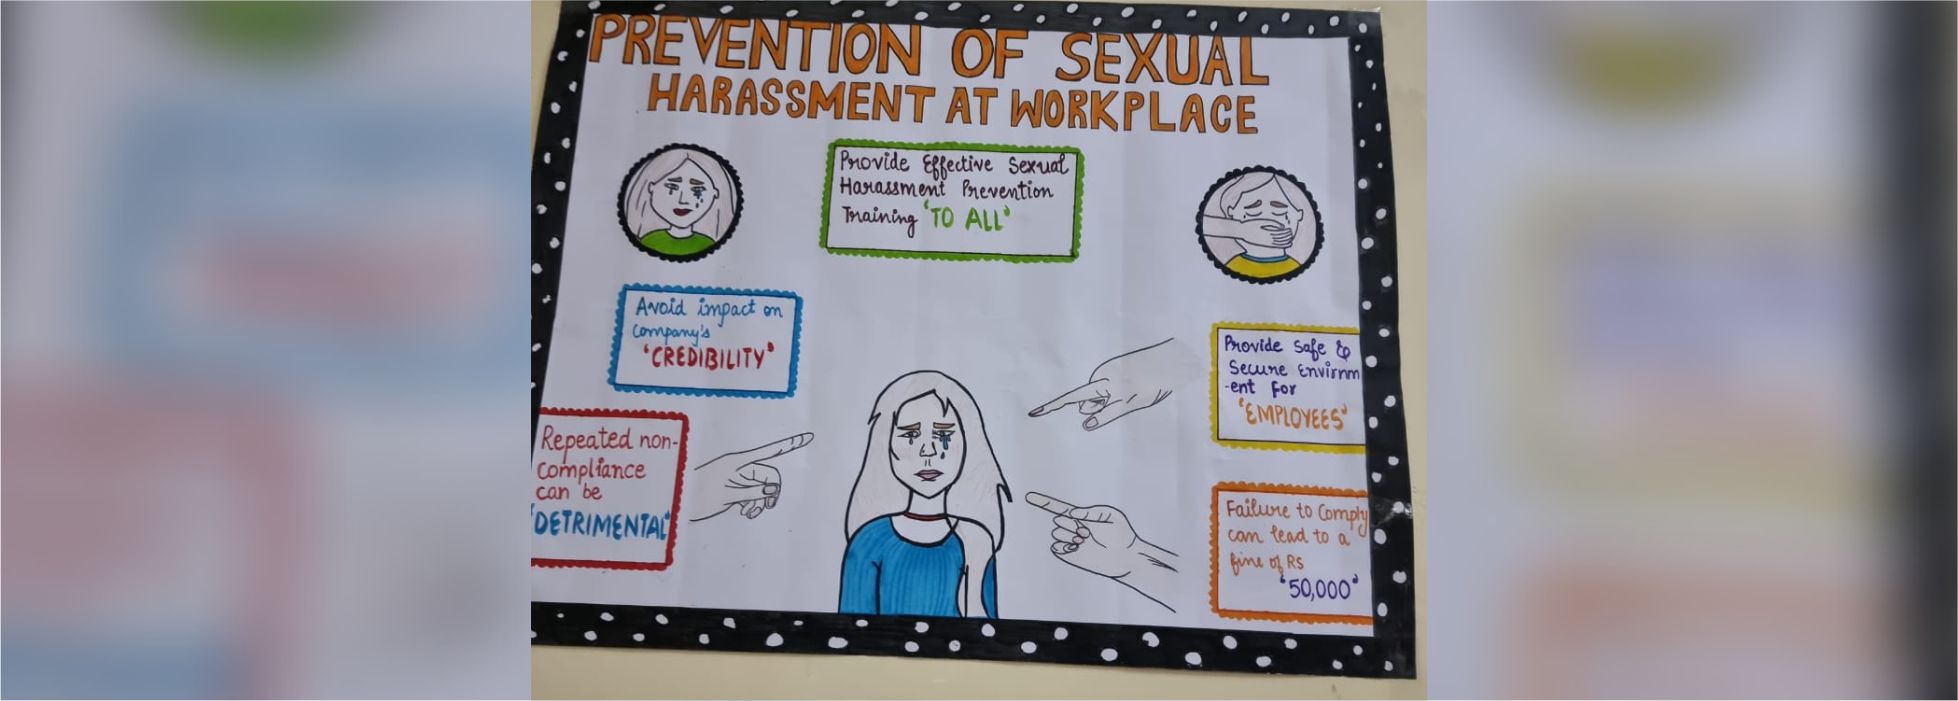 galimgs/Sexual Harassment Awareness Program/P - 4.jpg